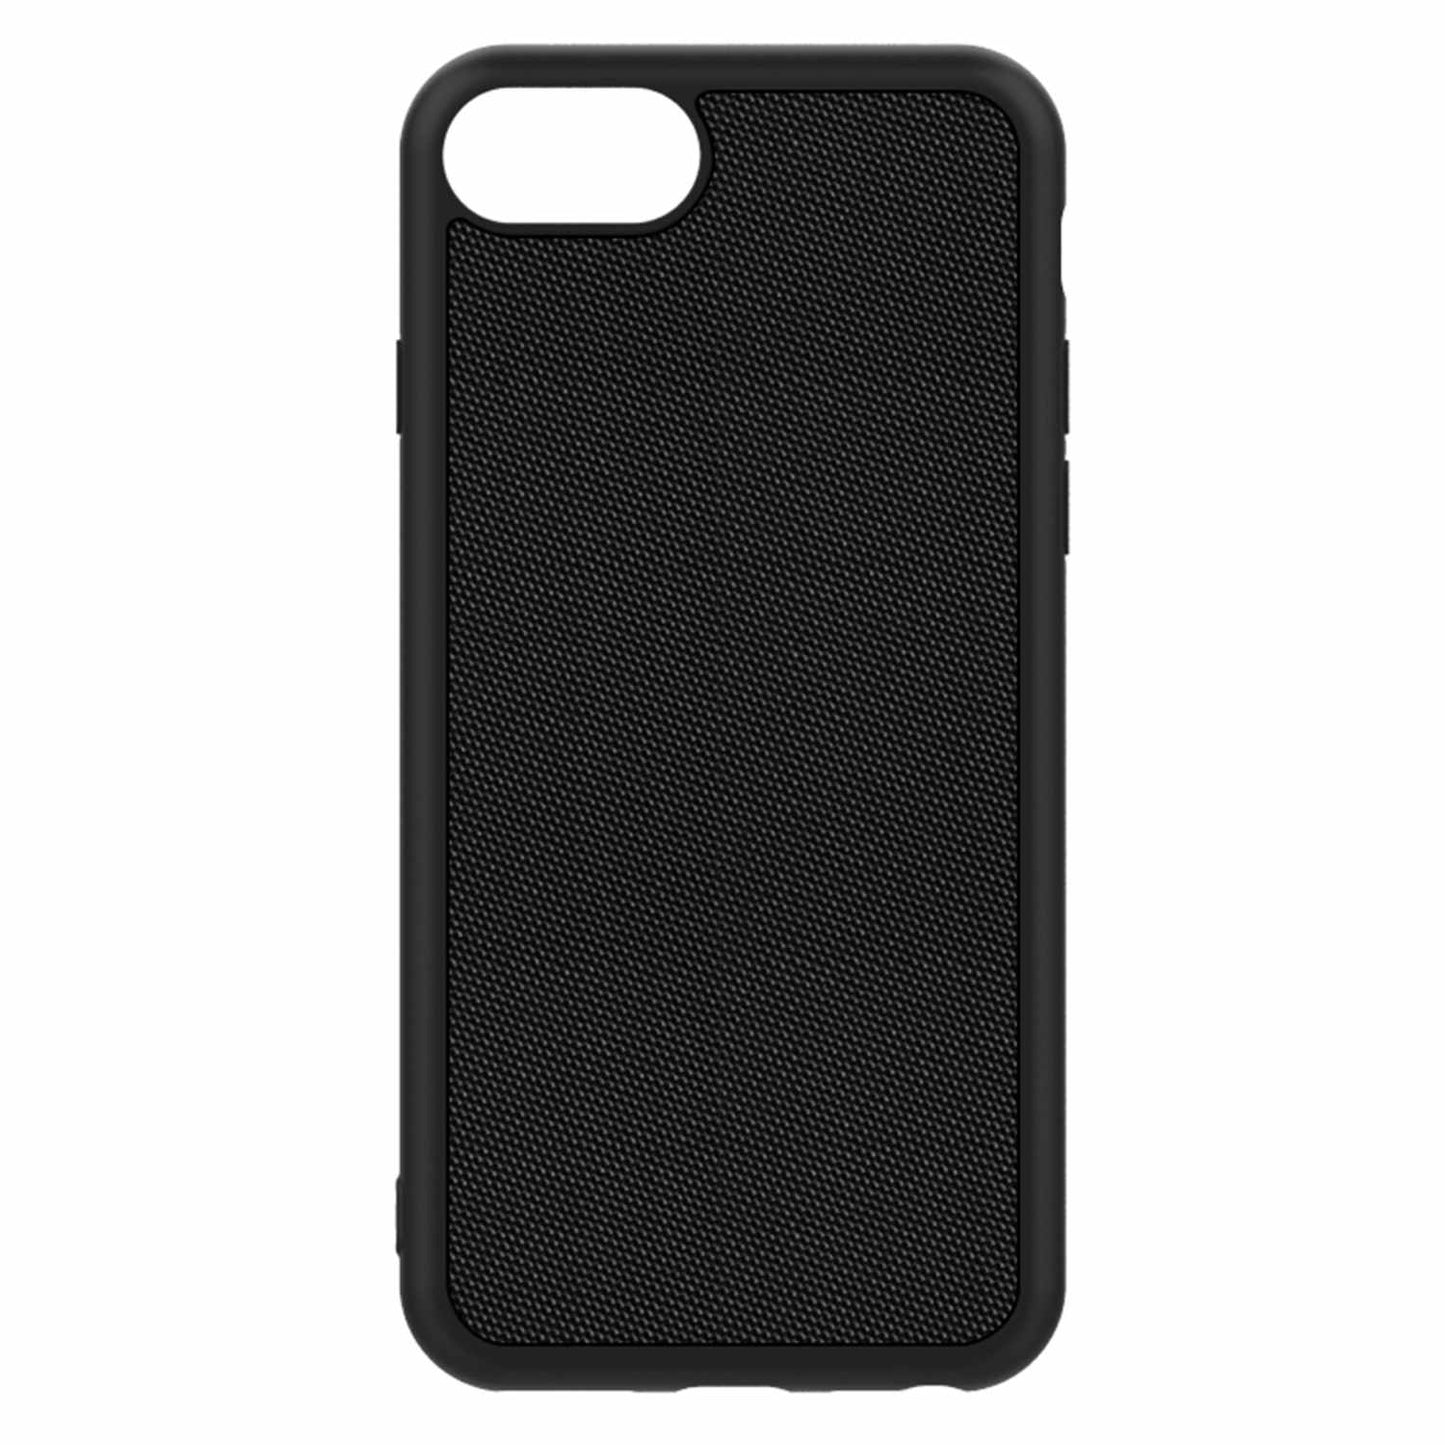 Tru Nylon Case Black for iPhone SE/8/7